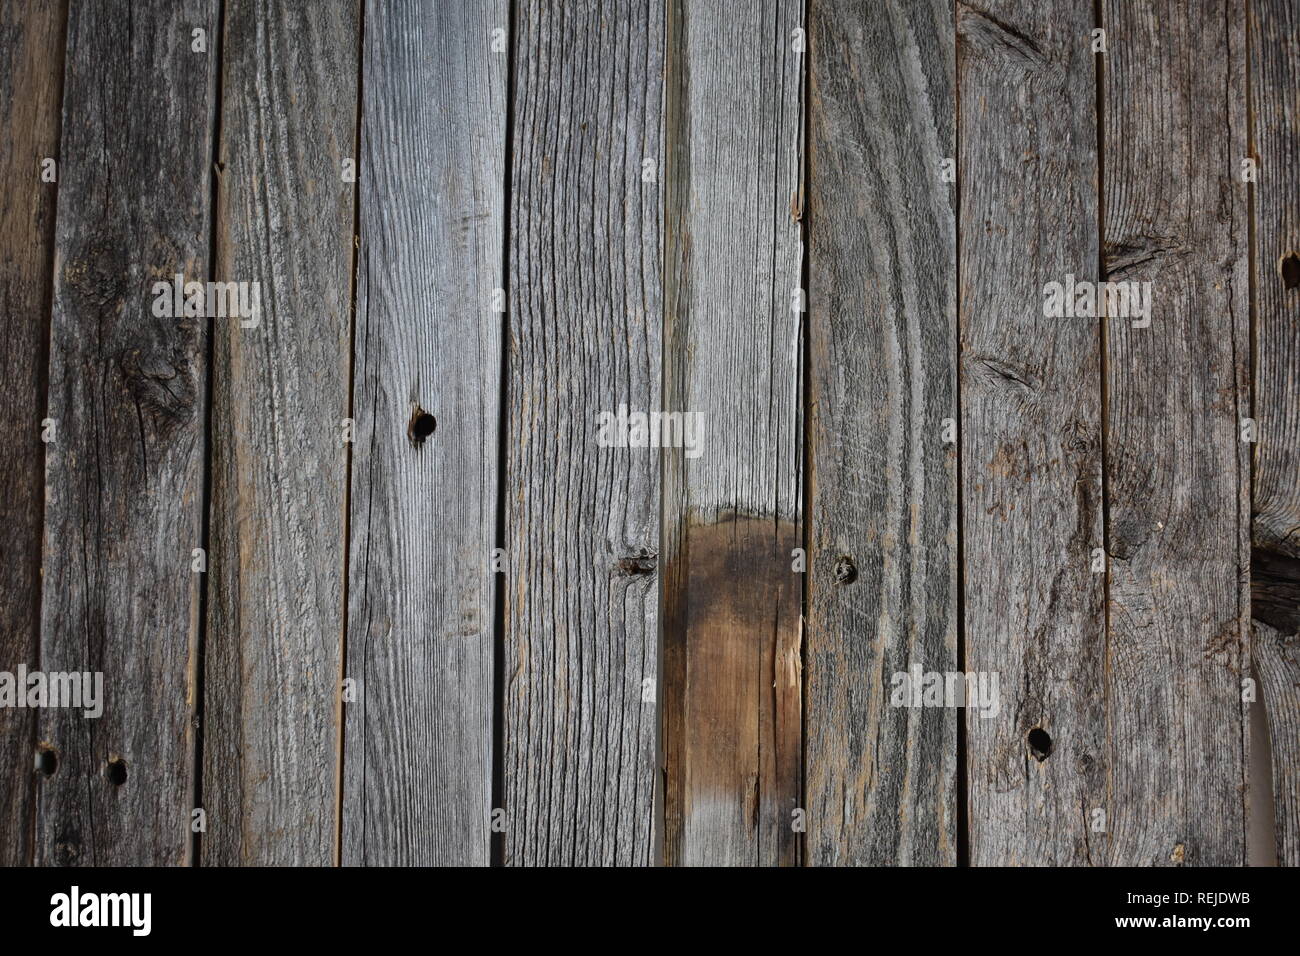 Uneven wooden texture Stock Photo